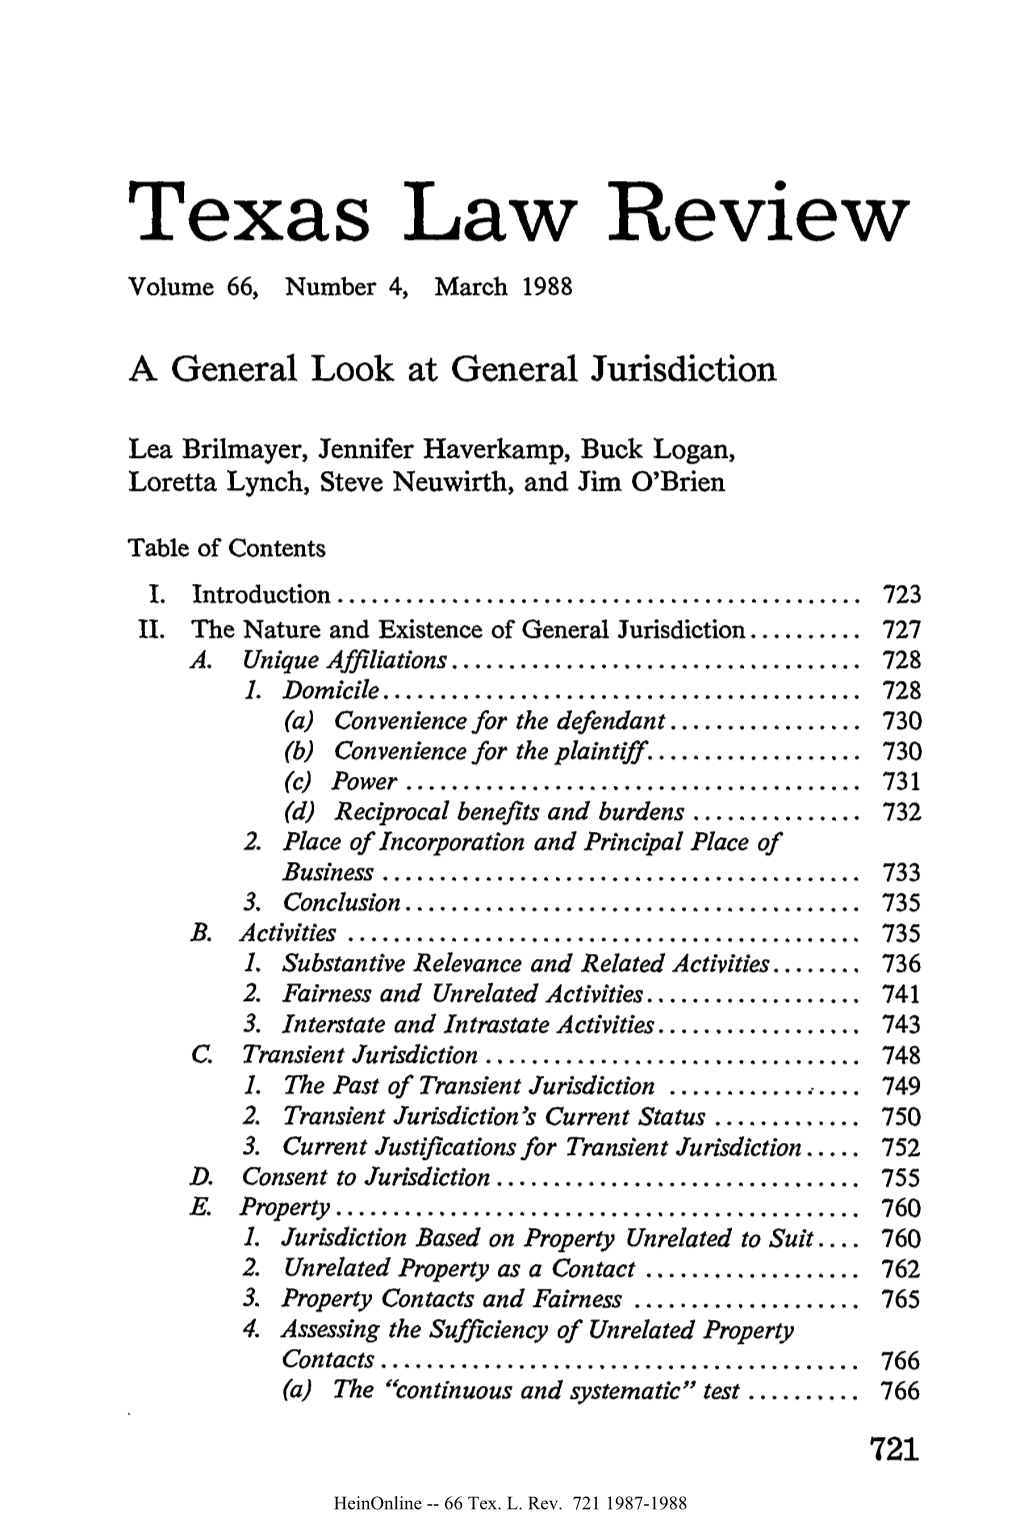 A General Look at General Jurisdiction